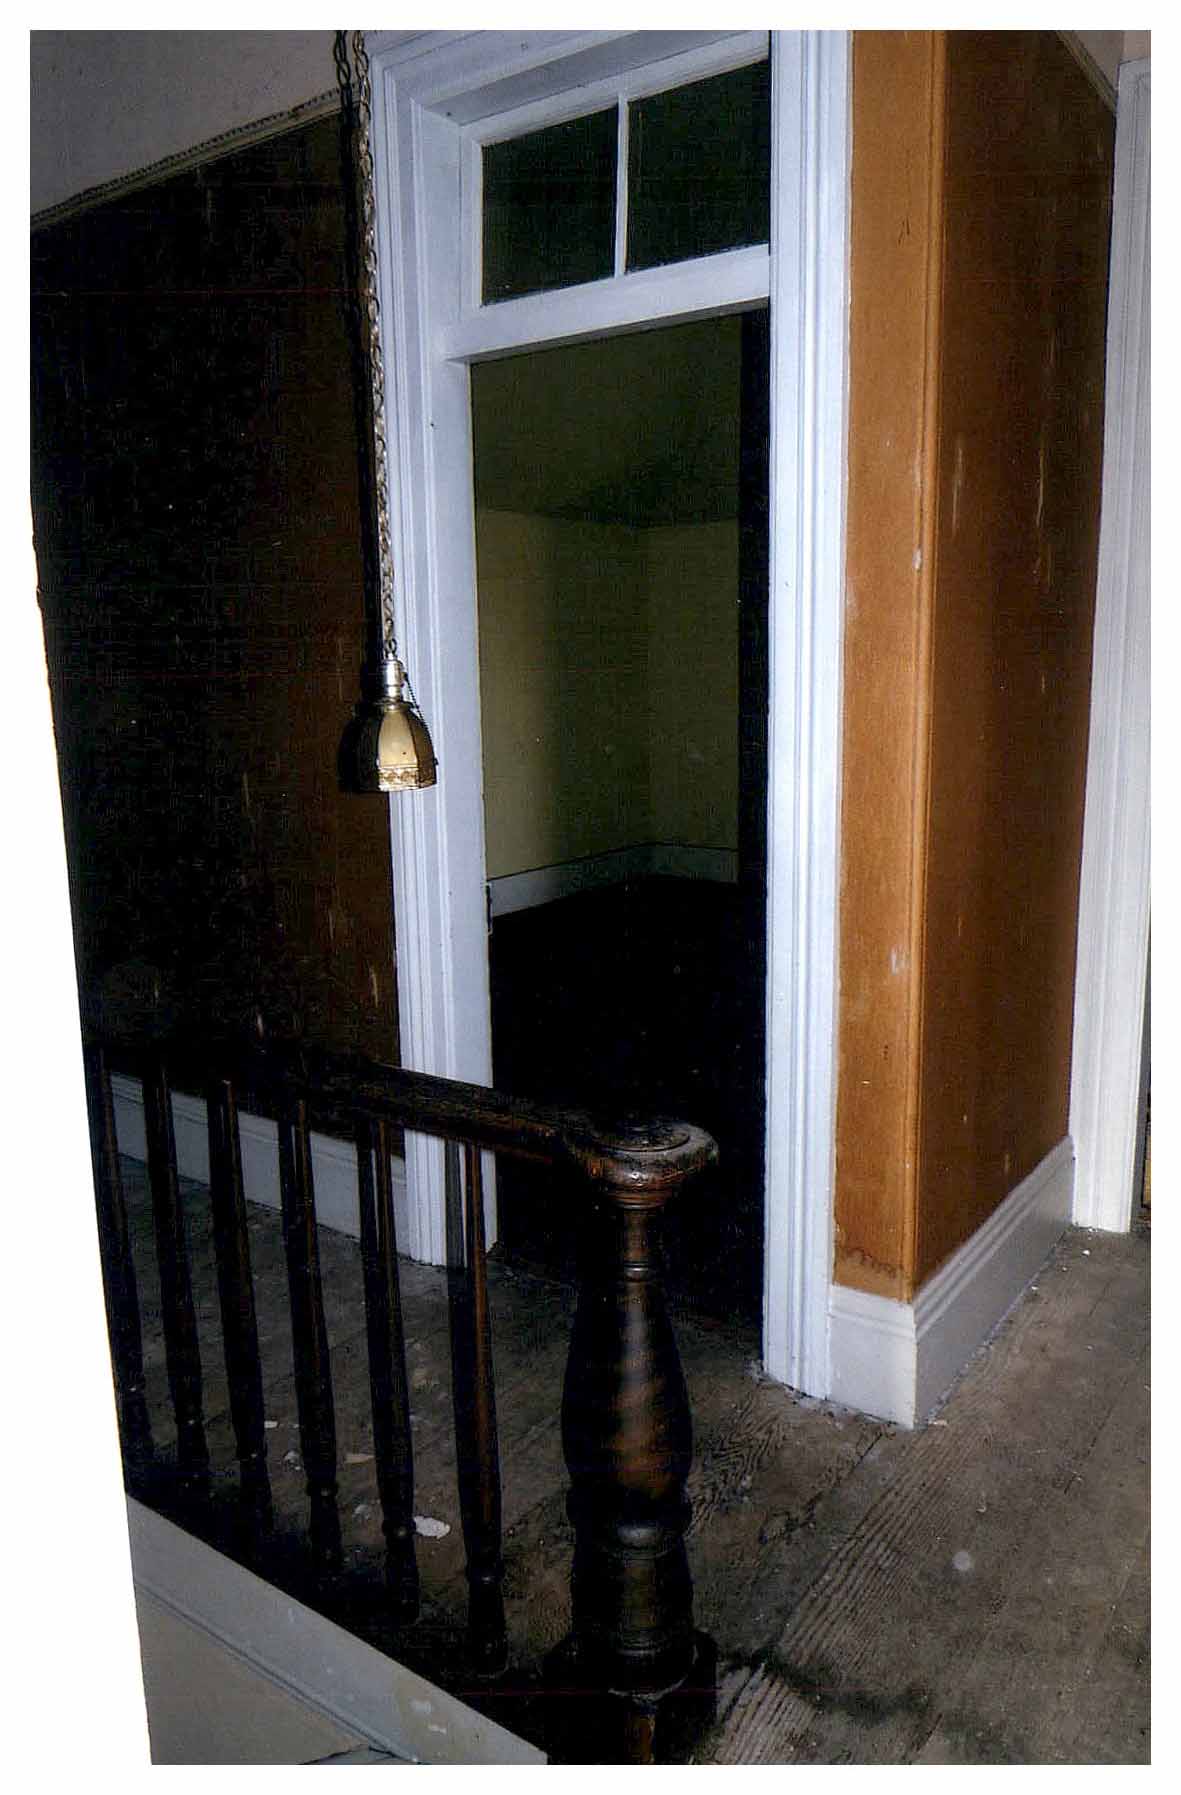 Before: same view showing worn hallway walls, unfinished wood floor and dark bedroom beyond.